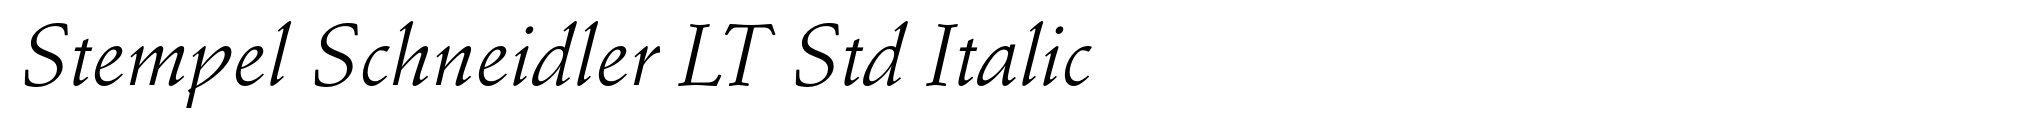 Stempel Schneidler LT Std Italic image